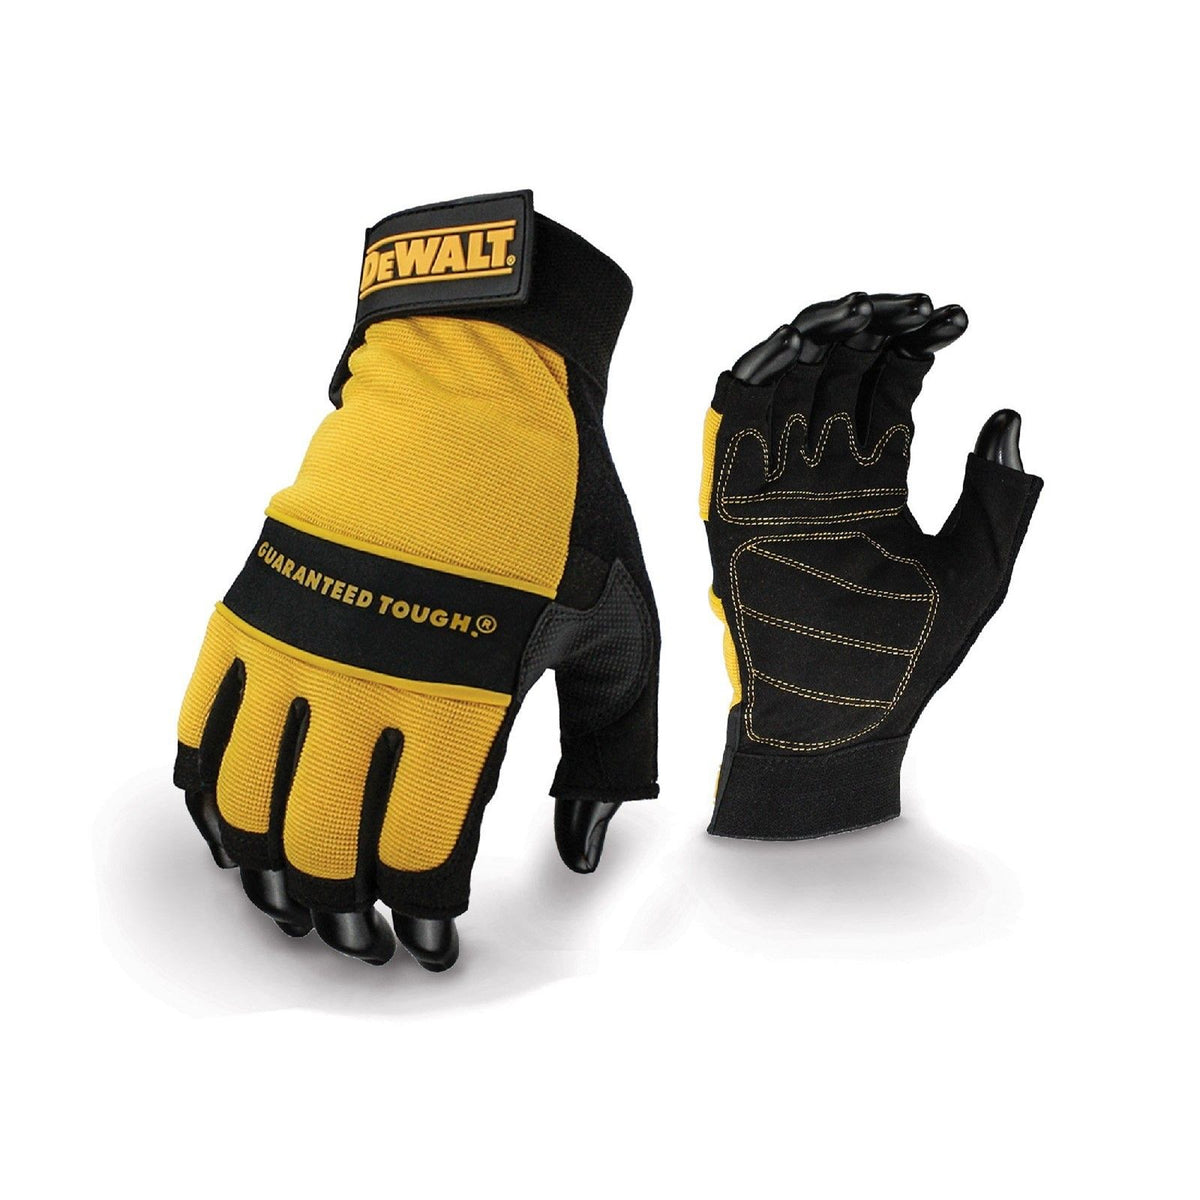 Dewalt Tough Fingerless Performance Glove - Black/Yellow - Size Itm (26935-45201-01)